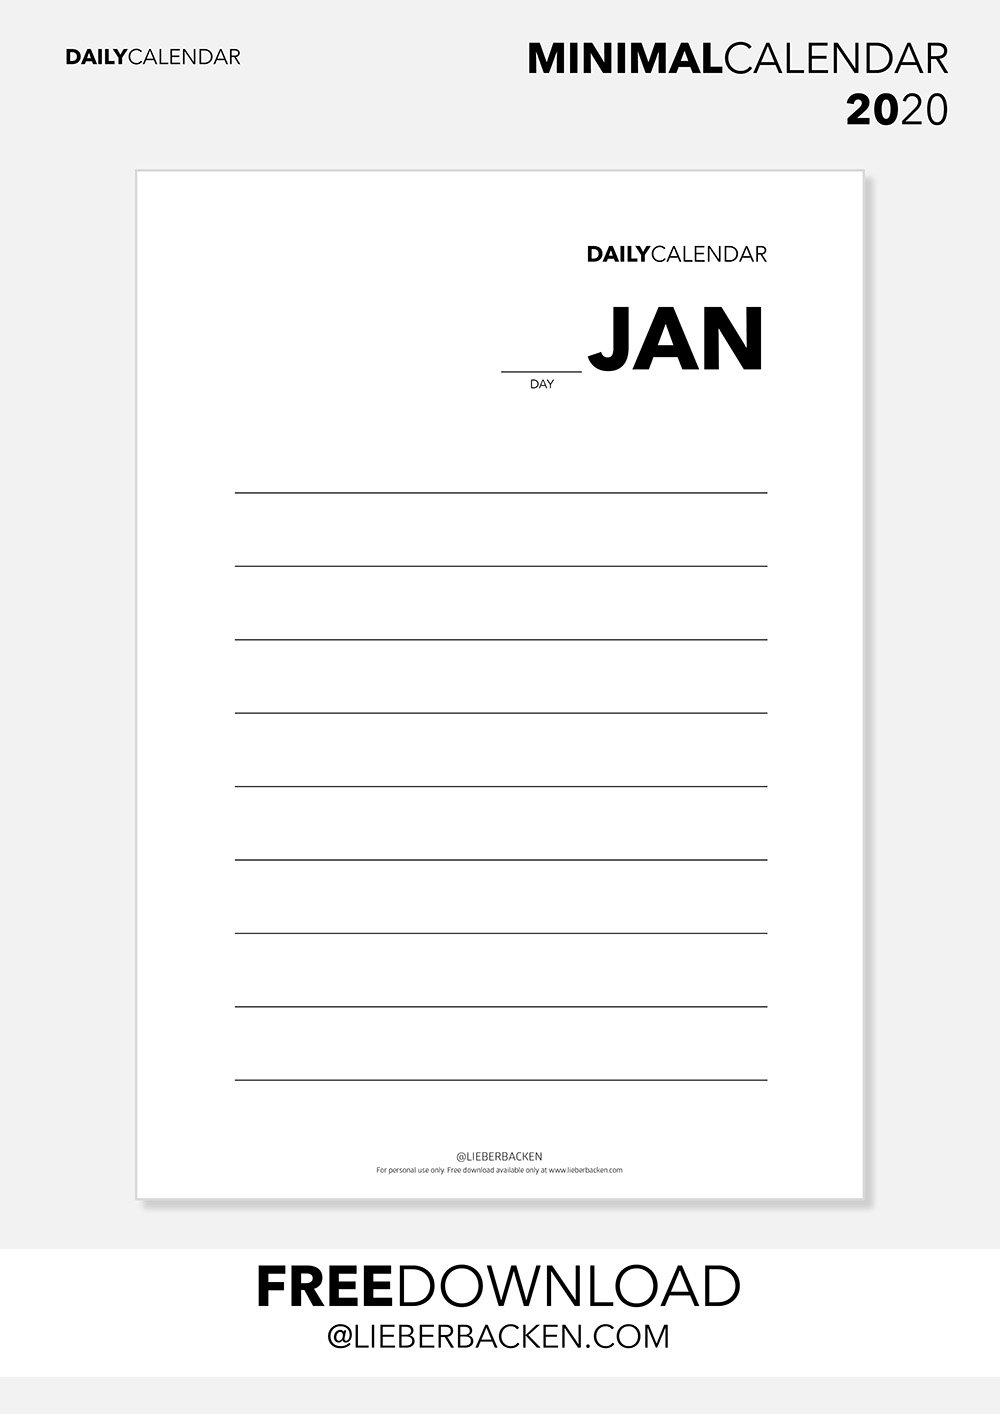 Daily Calender - Free Printable Calender 2020 Bundle | Gratis Download Kalender 2020